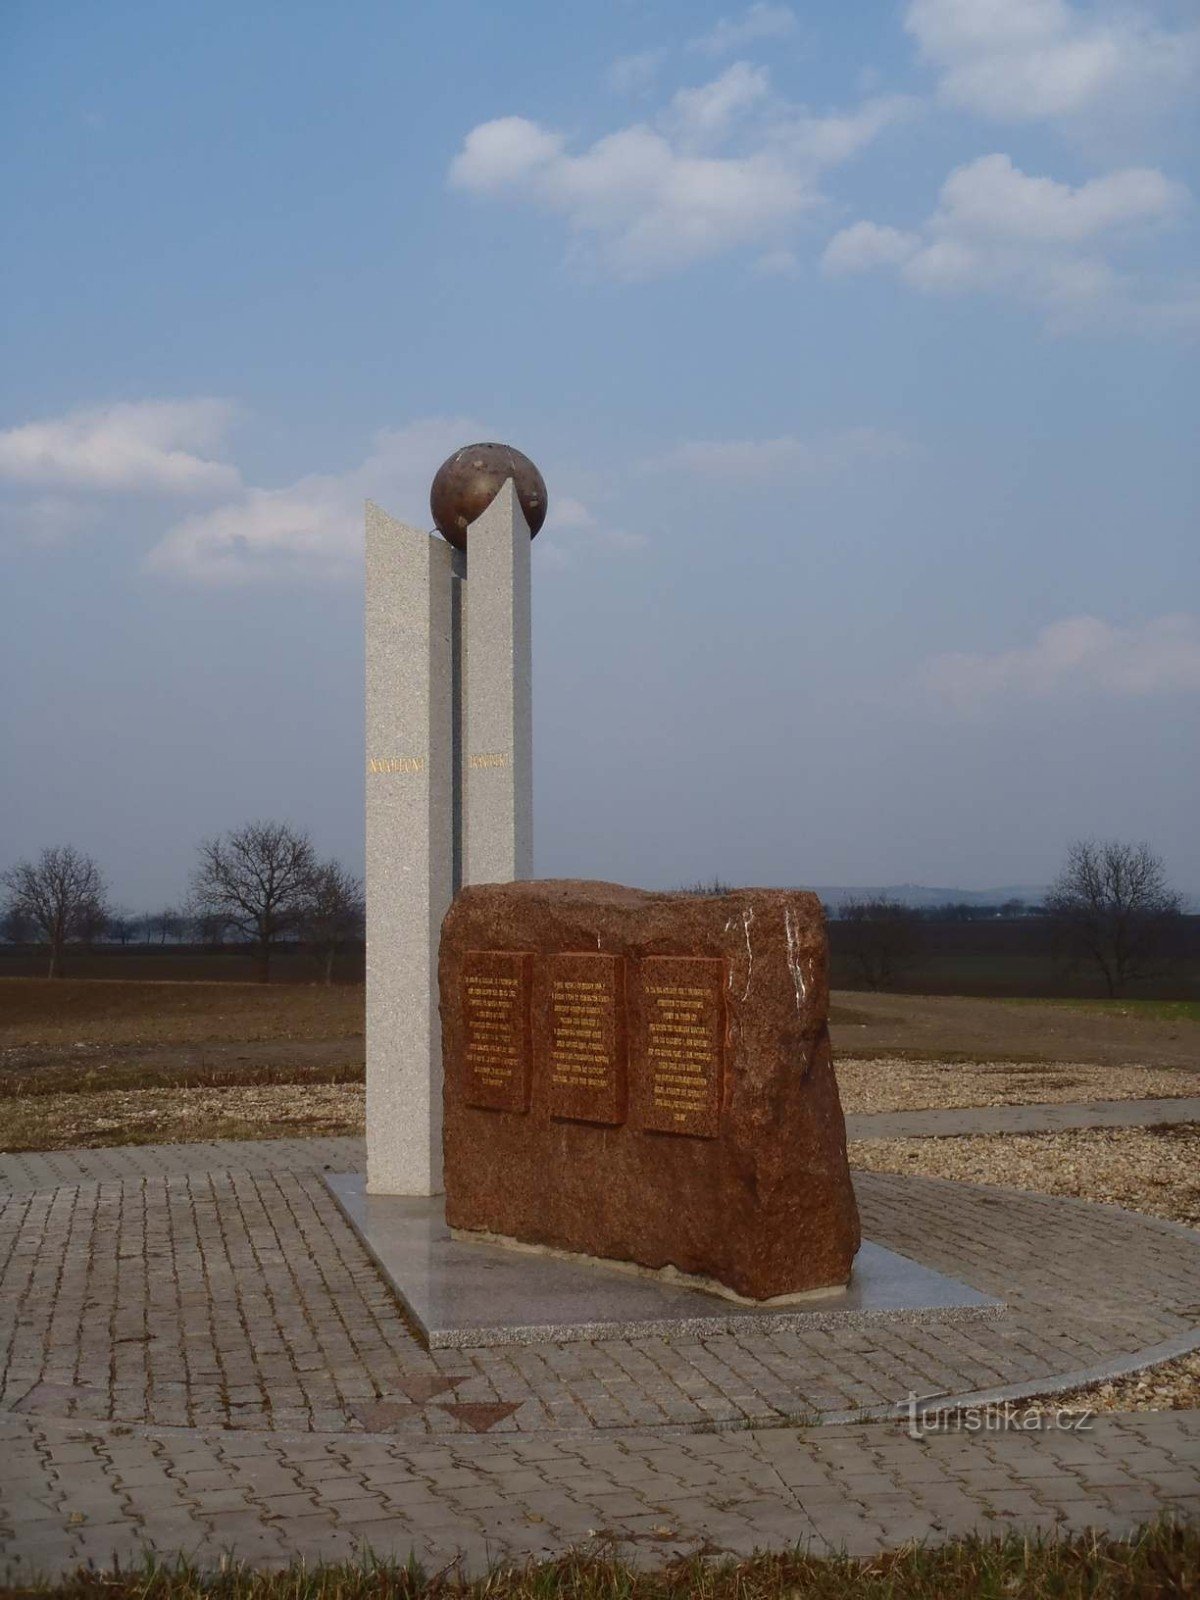 Kolmen keisarin muistomerkki - Zbýšov lähellä Brnoa - 23.3.2012